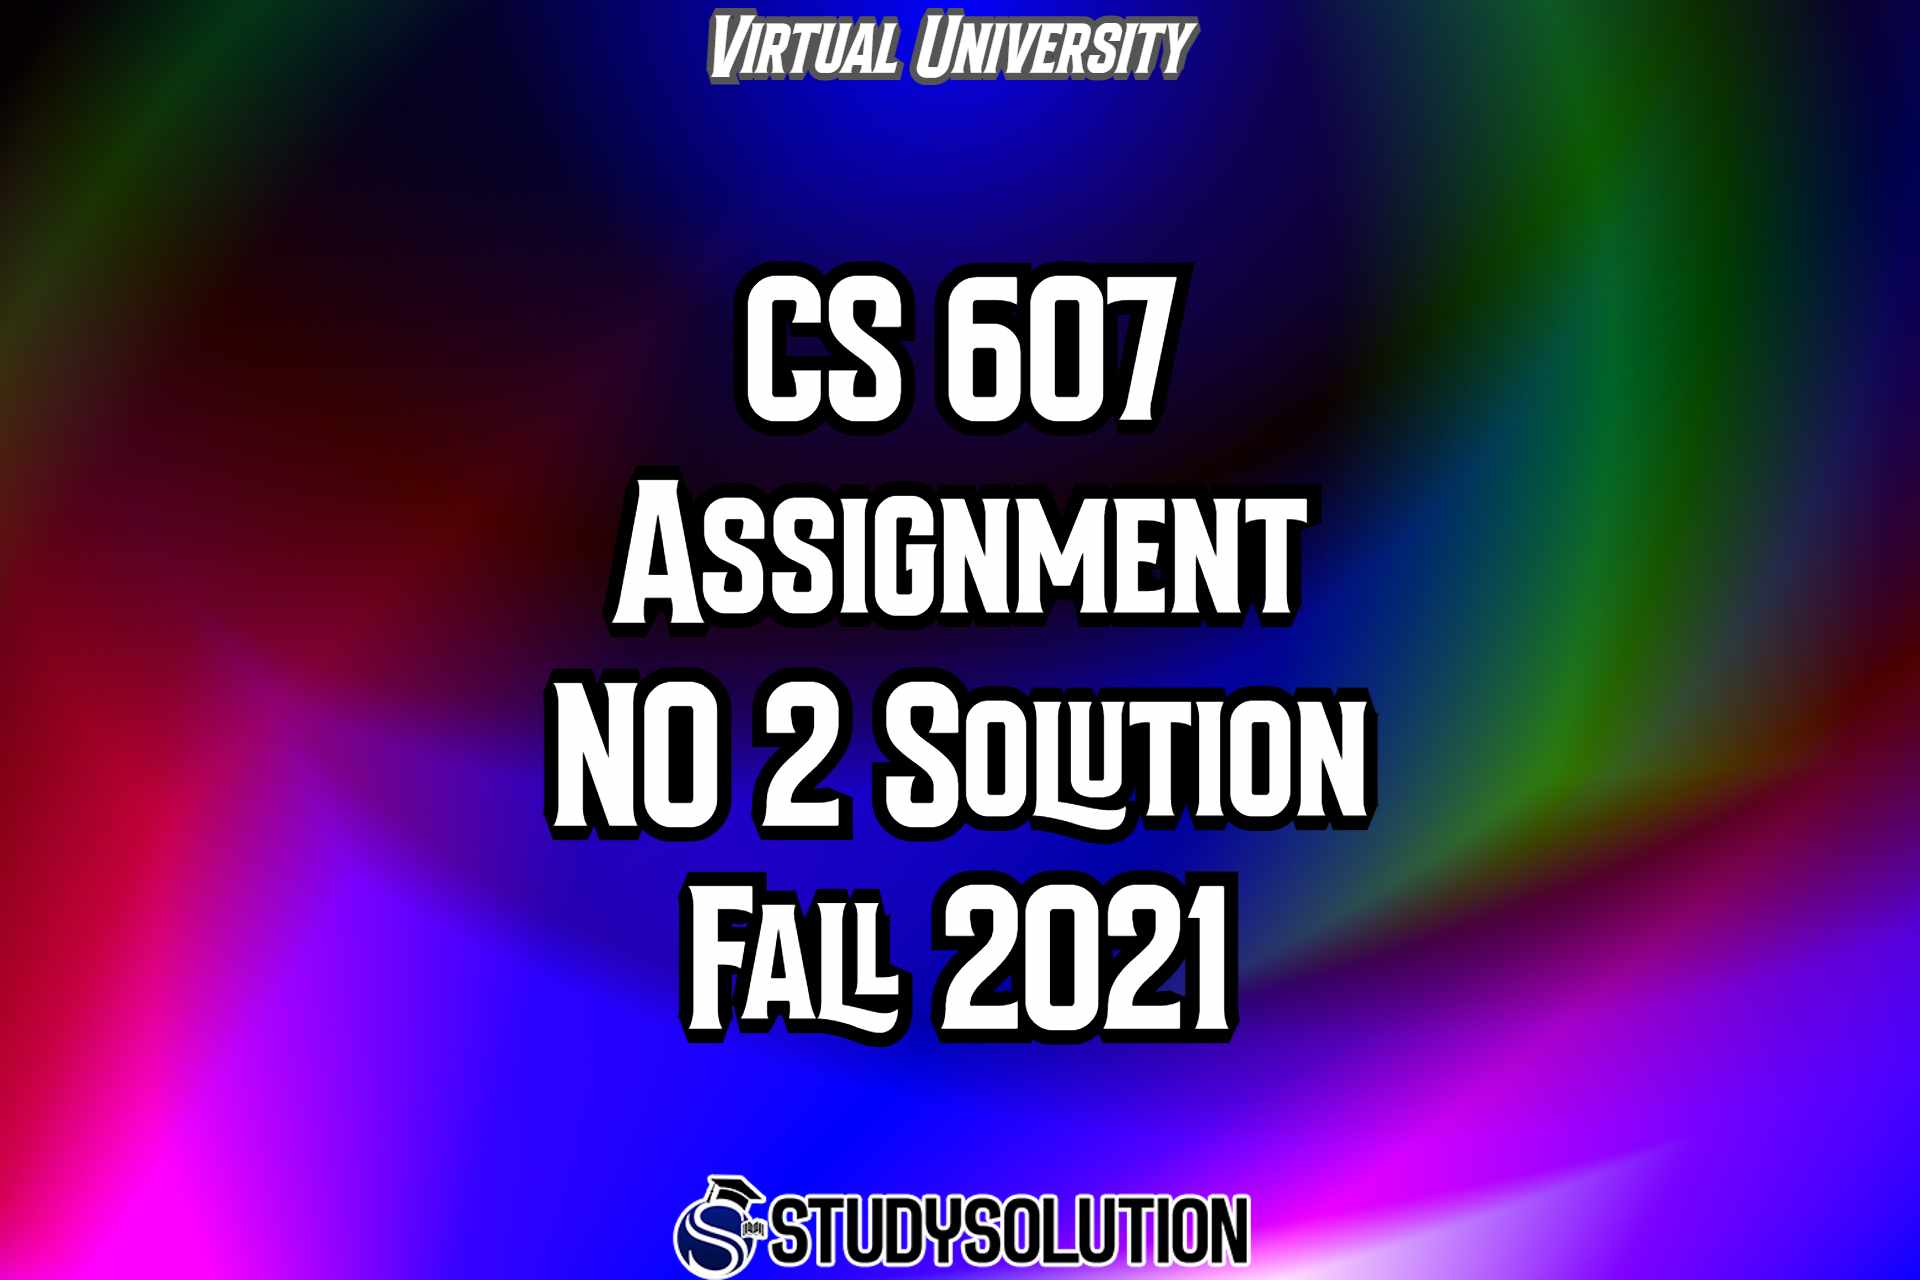 CS607 Assignment 2 Solution Fall 2021